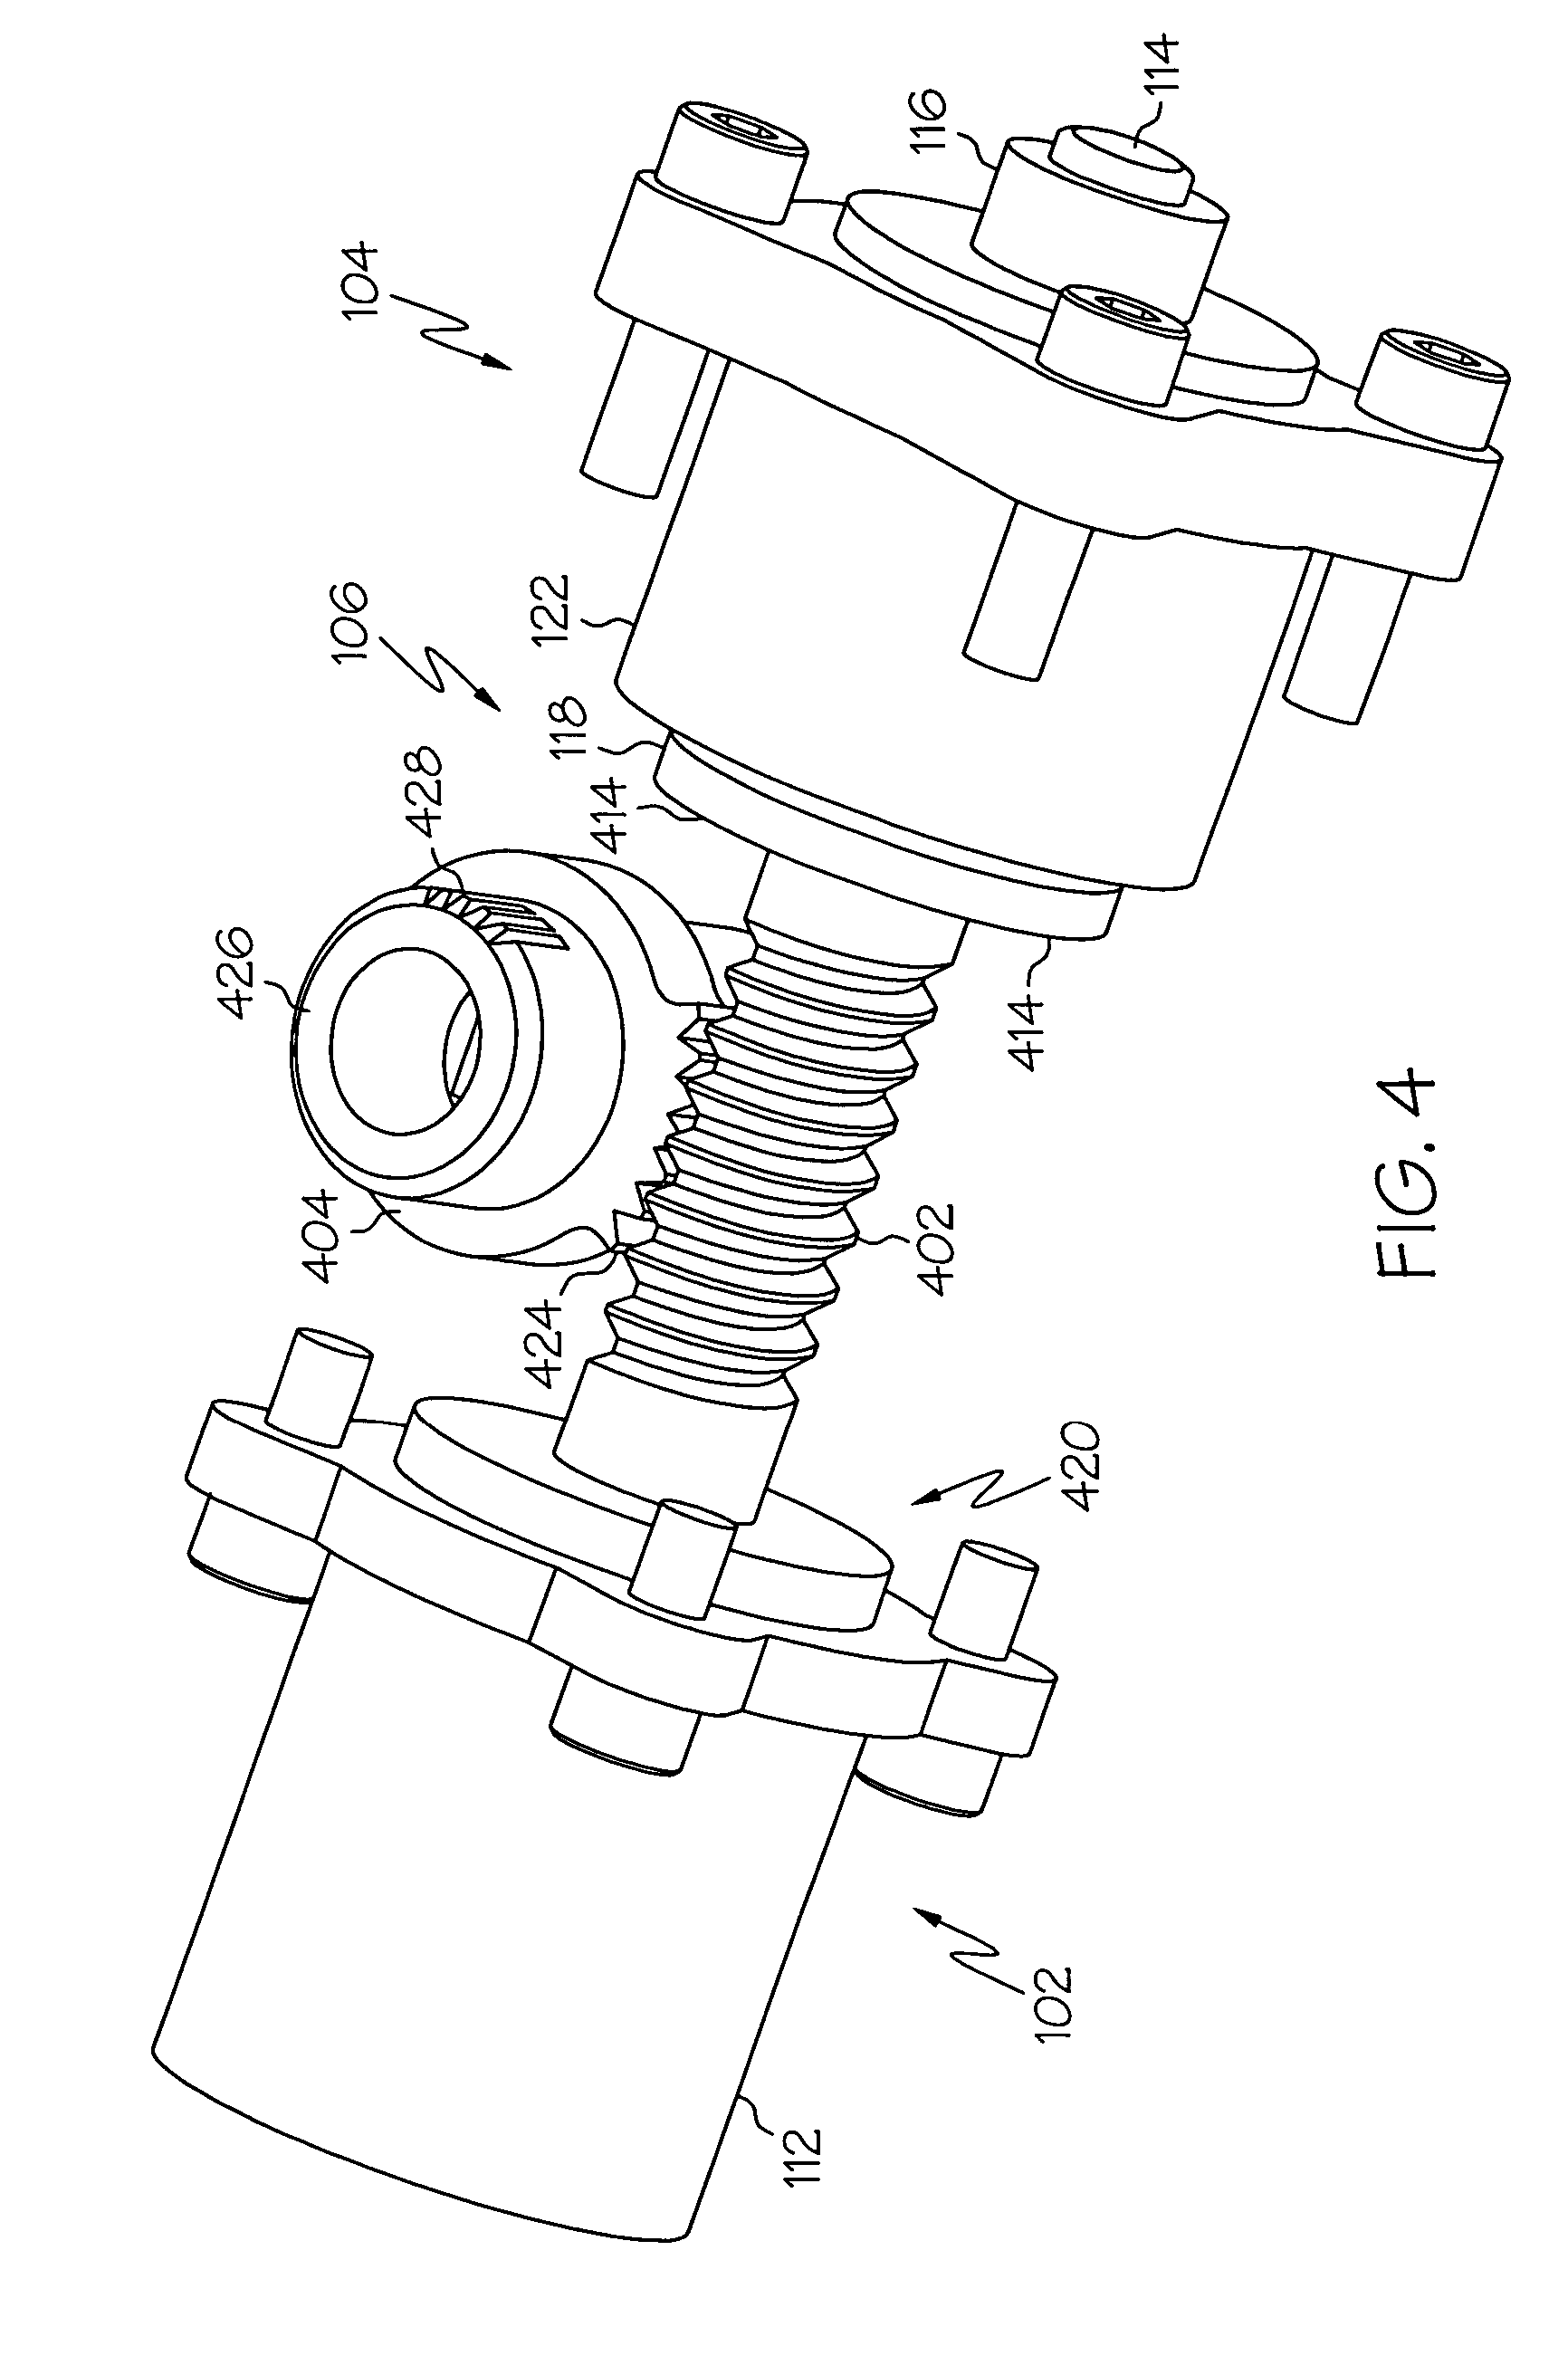 Motor driven harmonic drive actuator having an interposed output mechanism